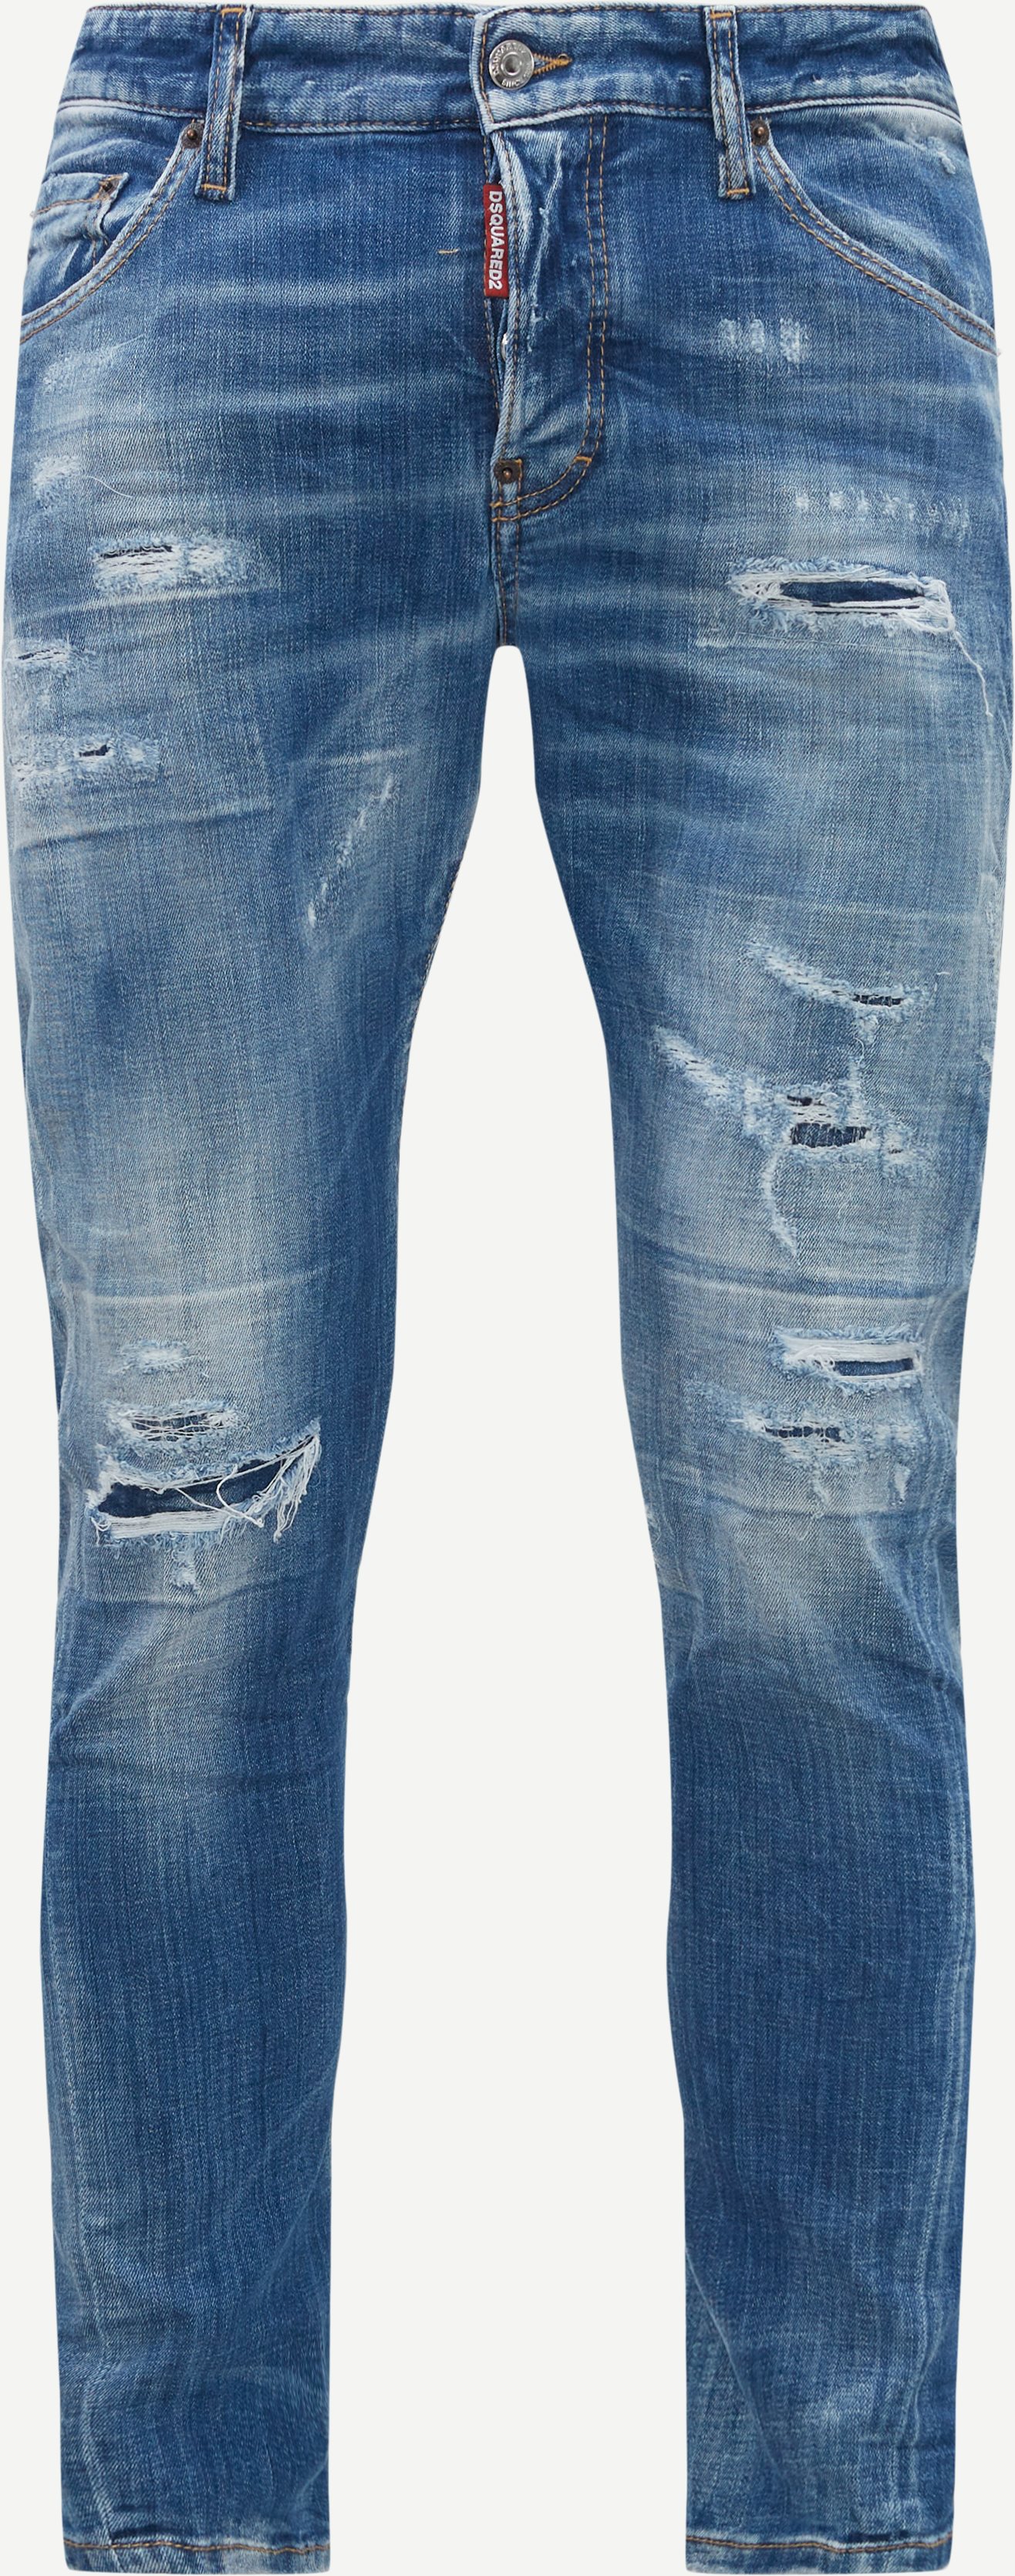 Dsquared2 jeans - Jeans - Regular fit - Denim